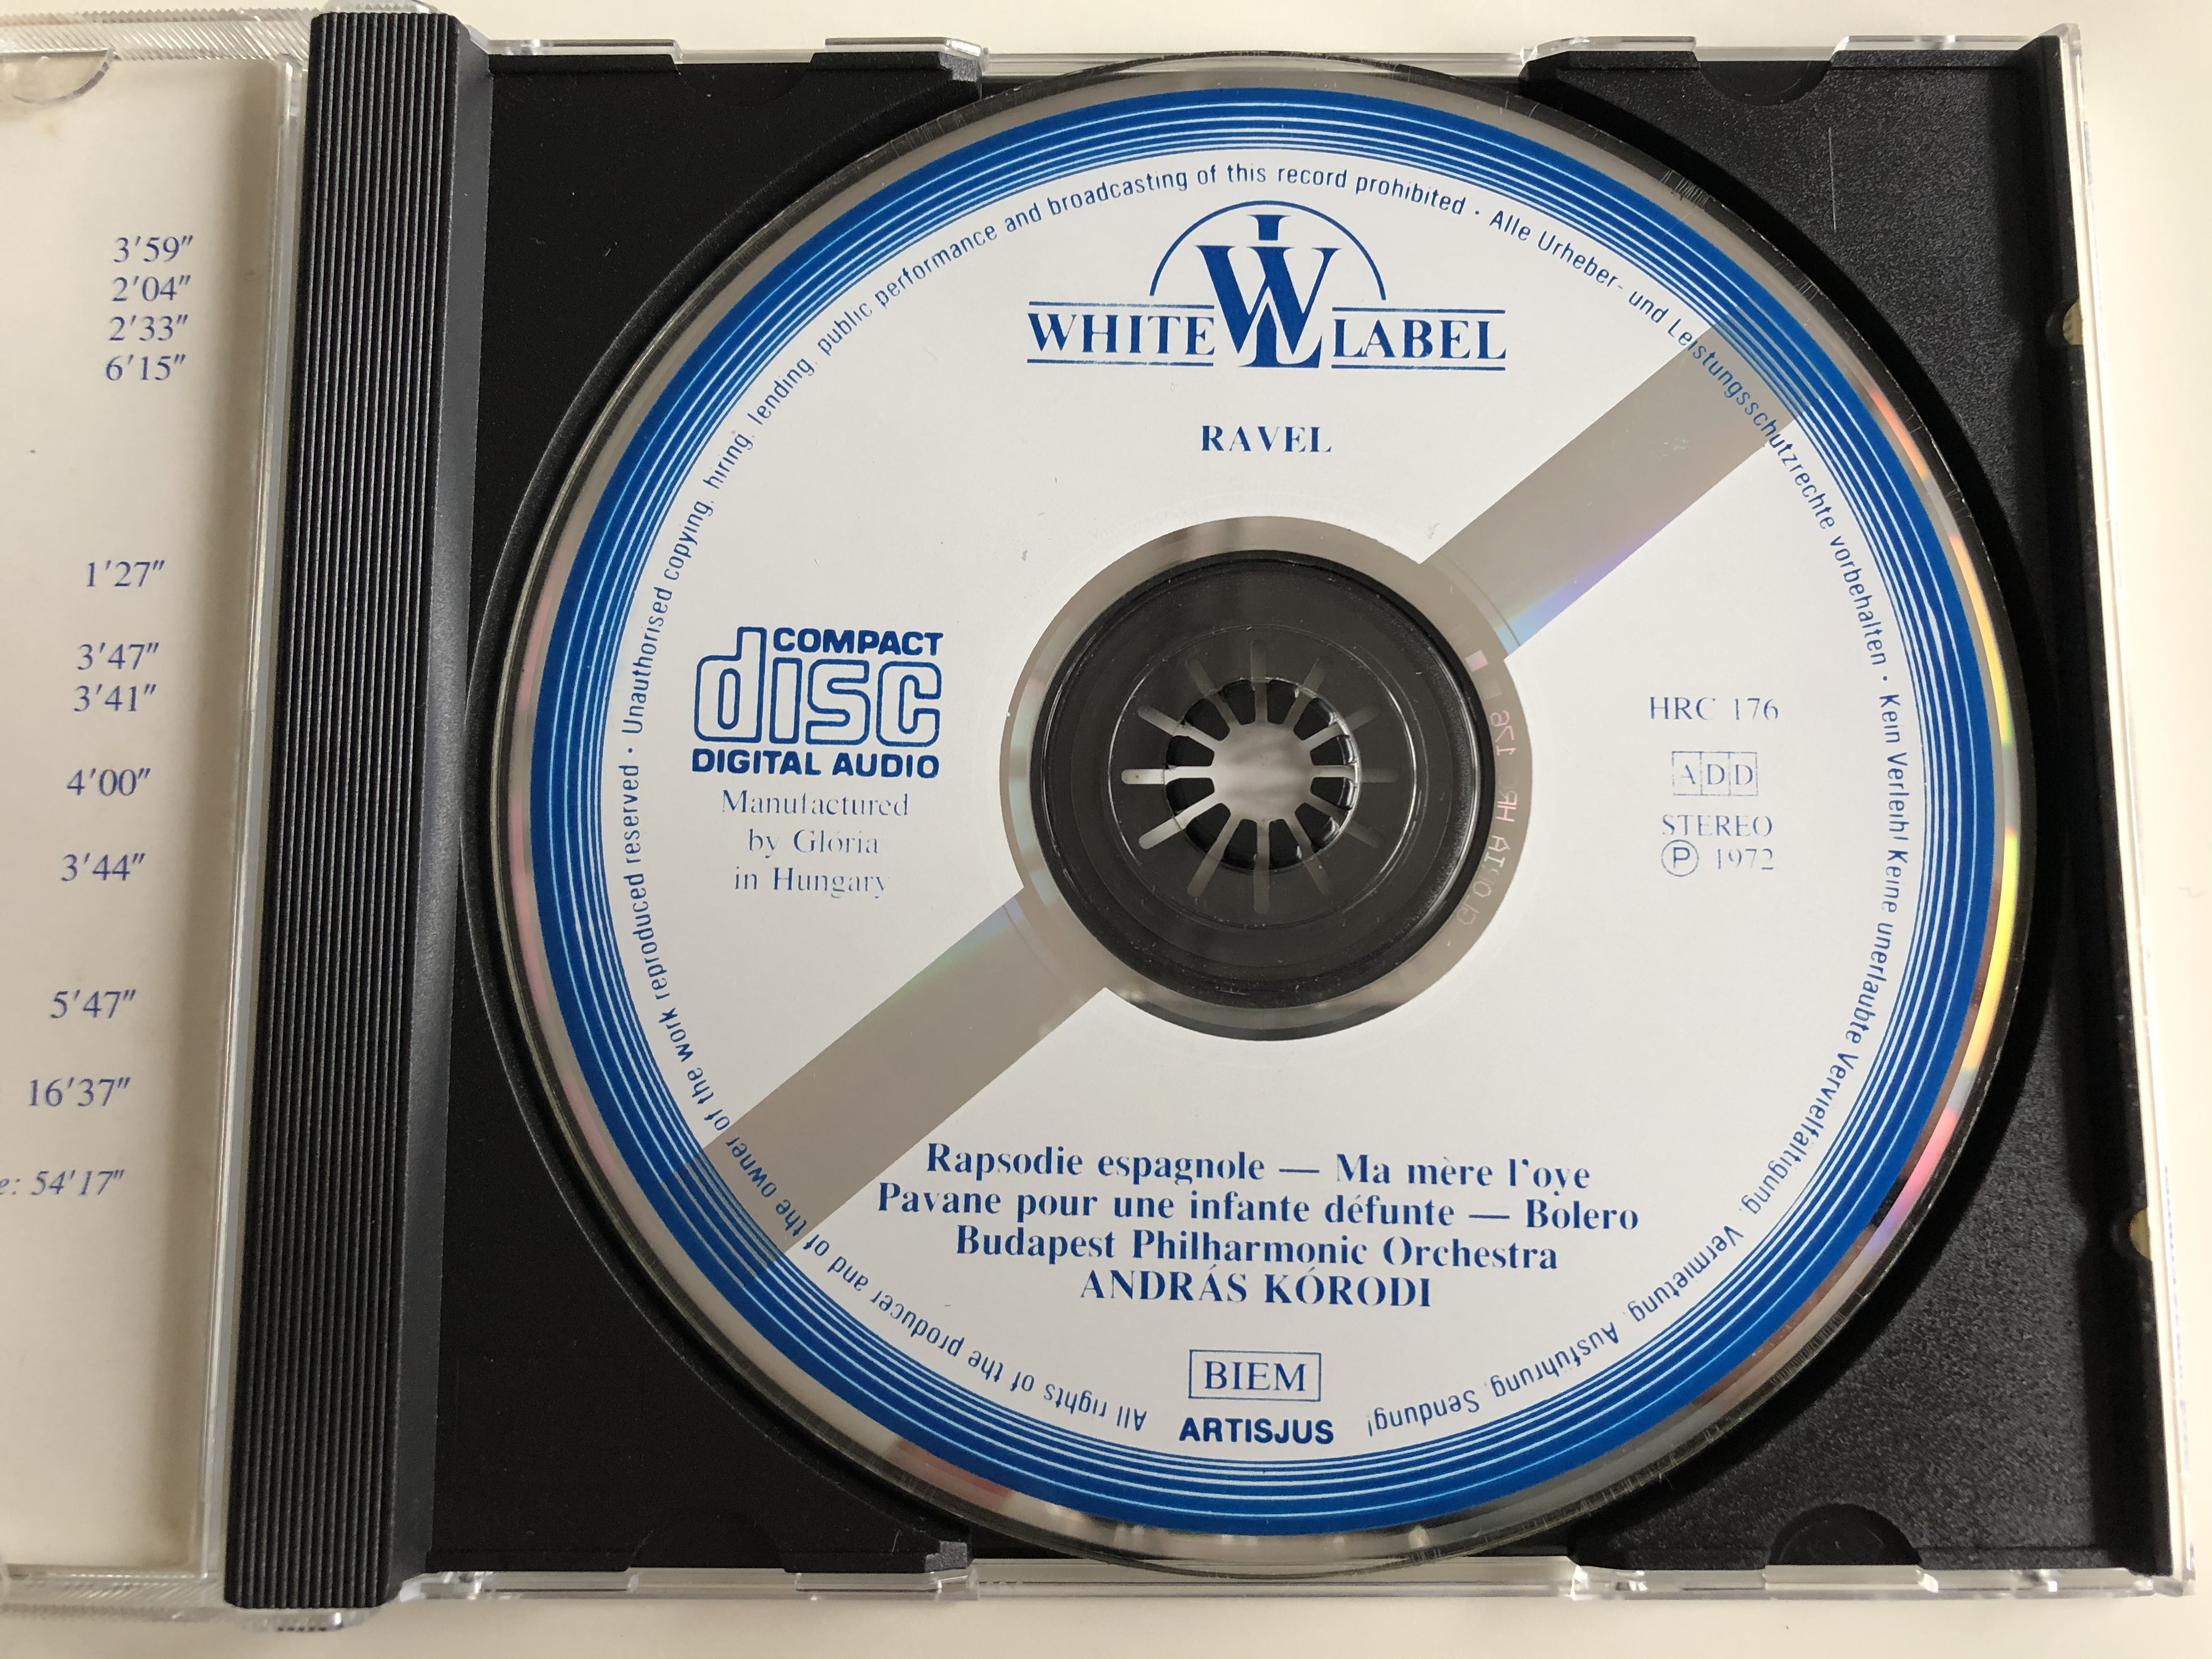 ravel-pavane-bolero-rhapsodie-espagnole-ma-mere-l-oye-budapest-philharmonic-orchstra-andr-s-k-rodi-white-label-audio-cd-1972-stereo-hrc-176-5-.jpg